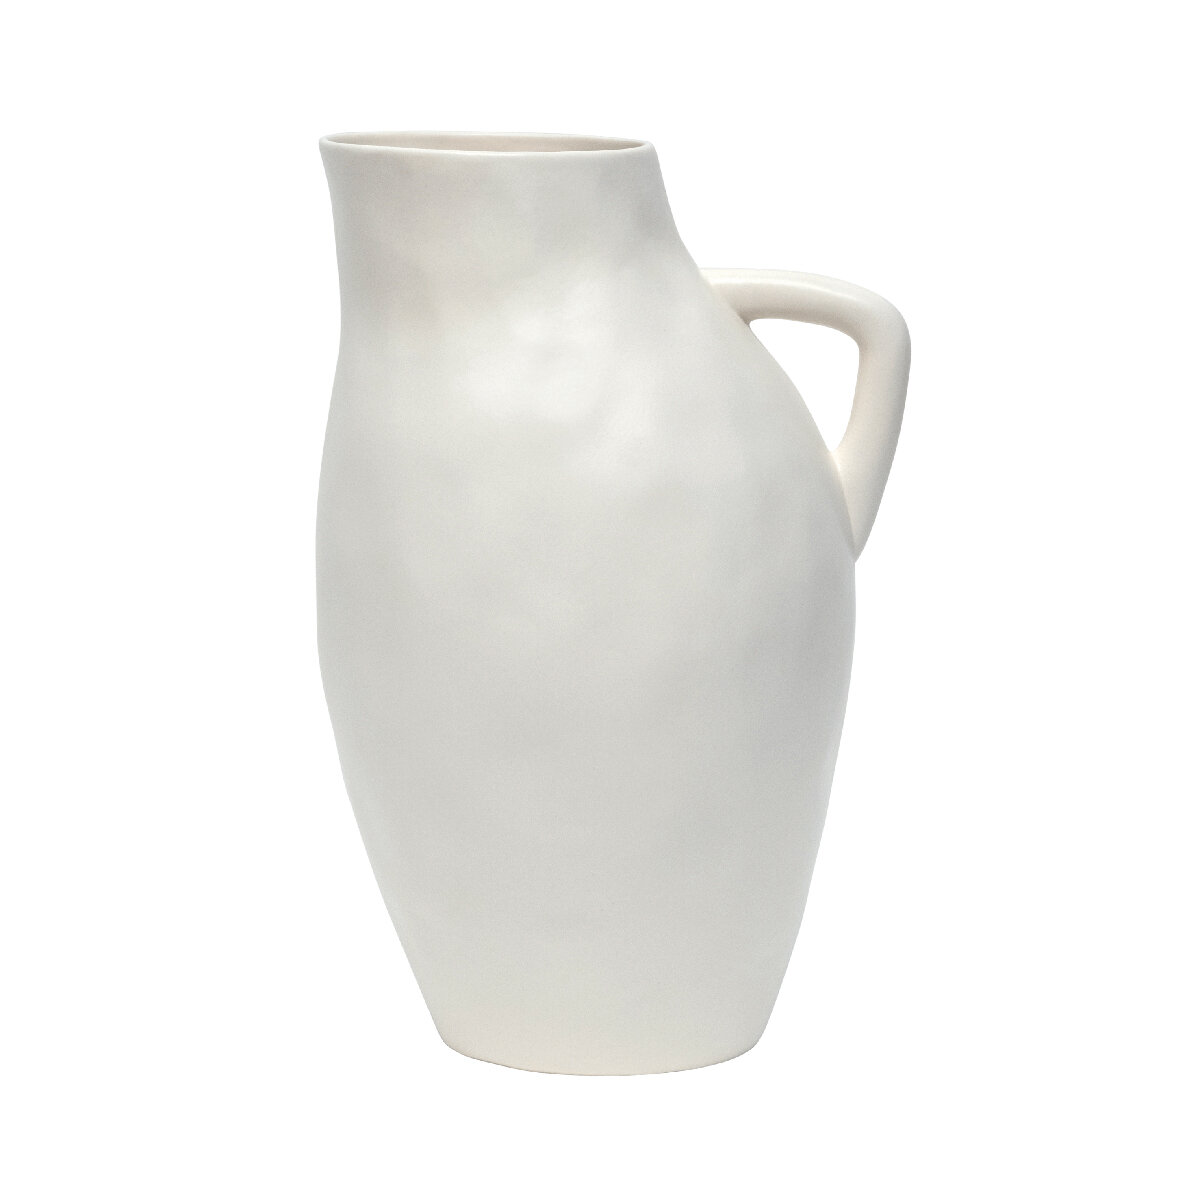 Twisted - Classic earthenware vase